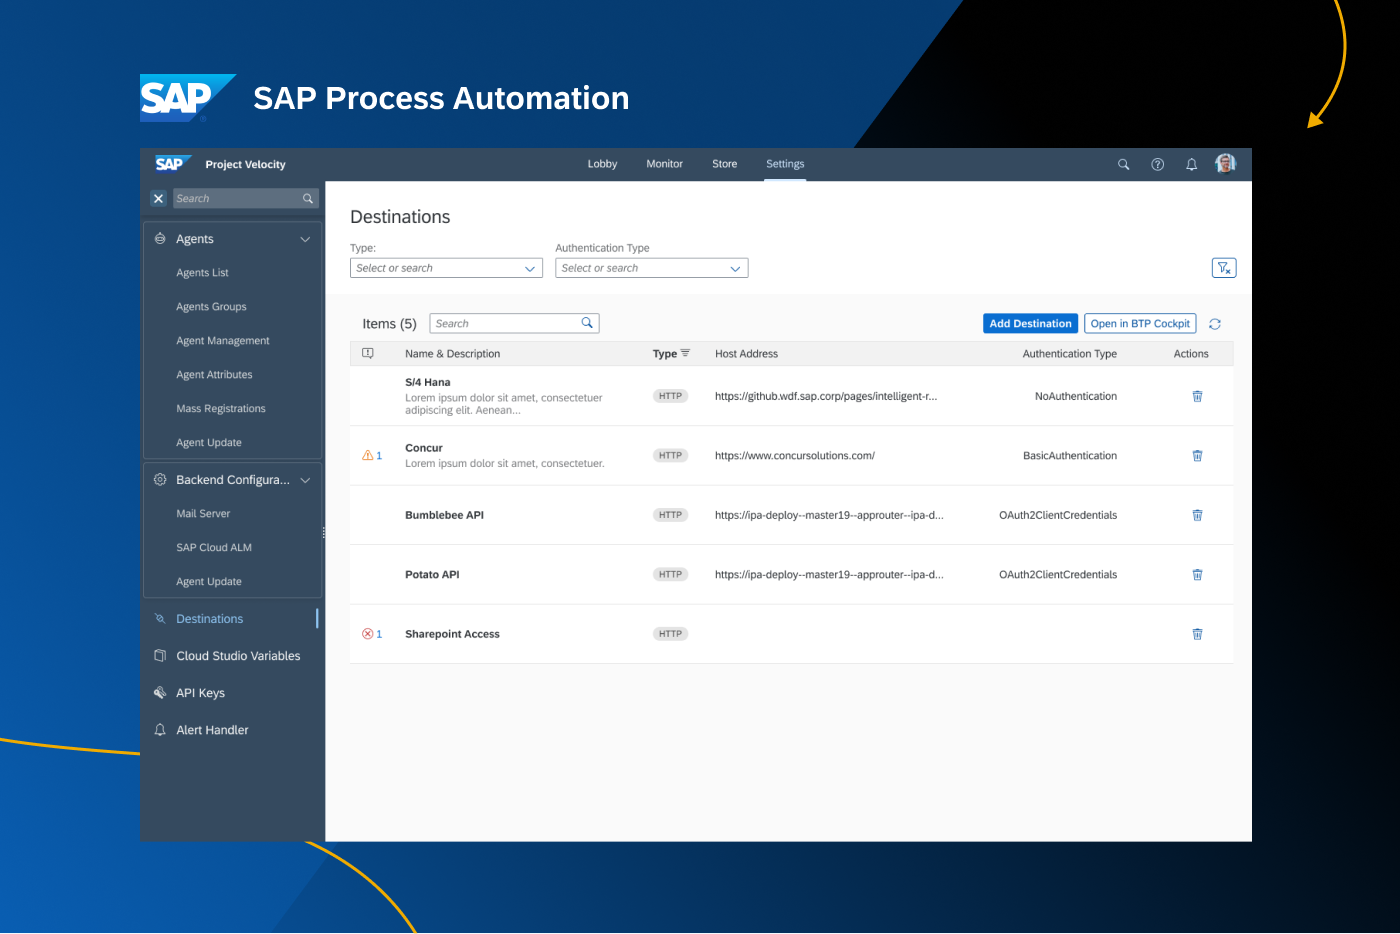 SAP Process Automation setting's page